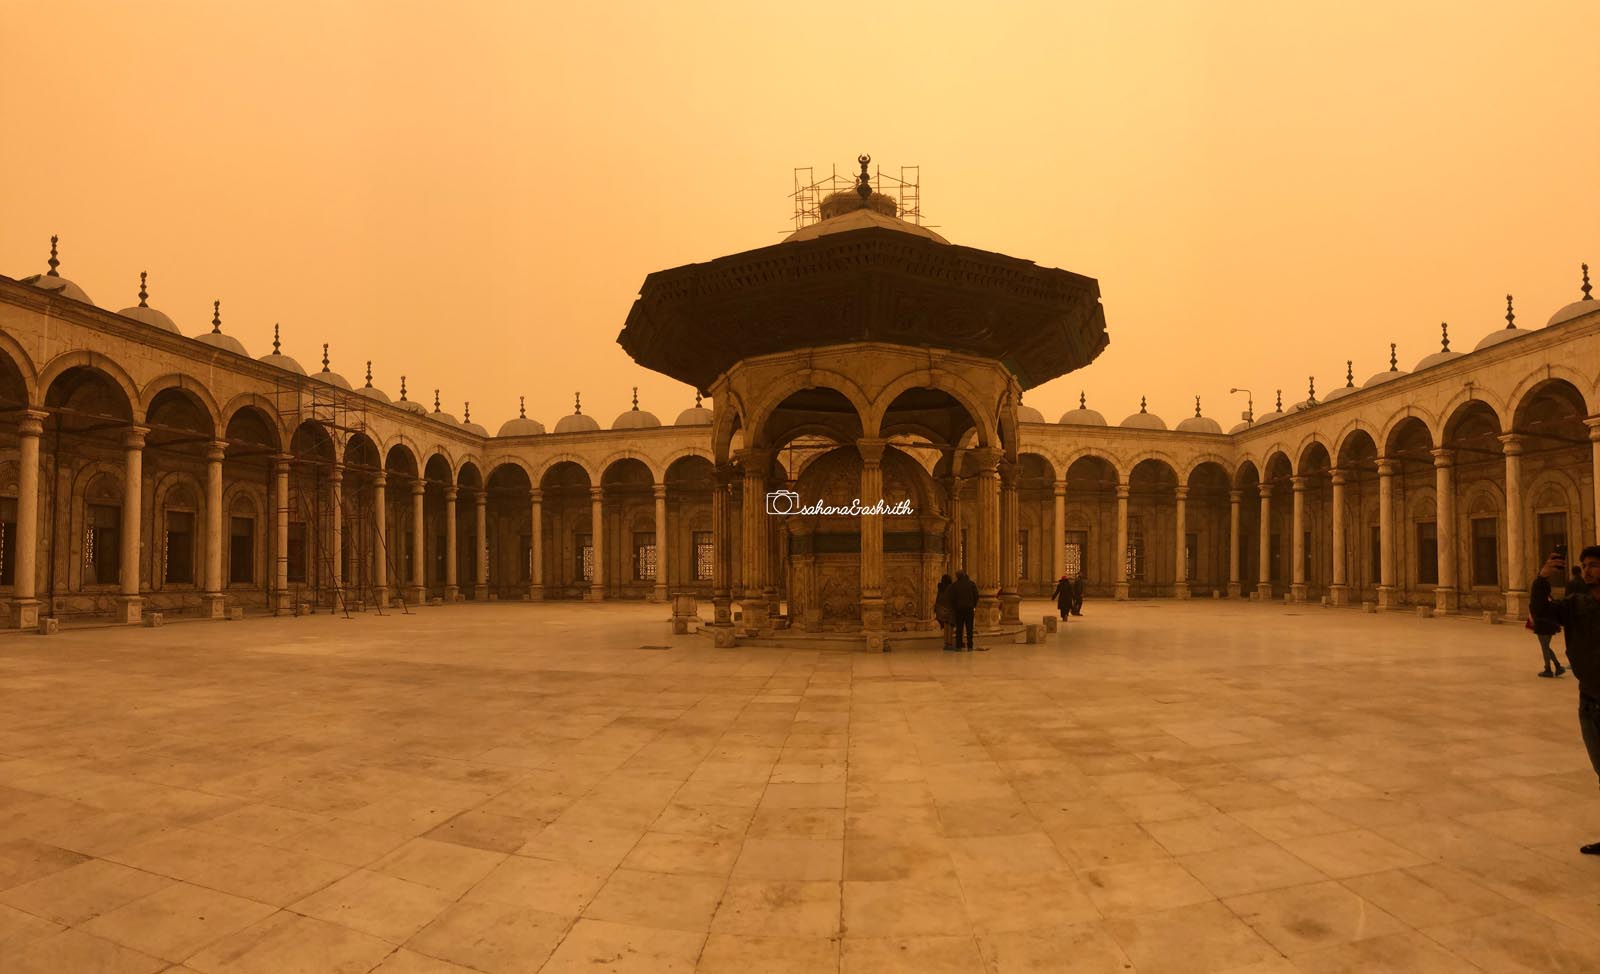 Muhammada ali mosque in Cairo citadel's courtyard